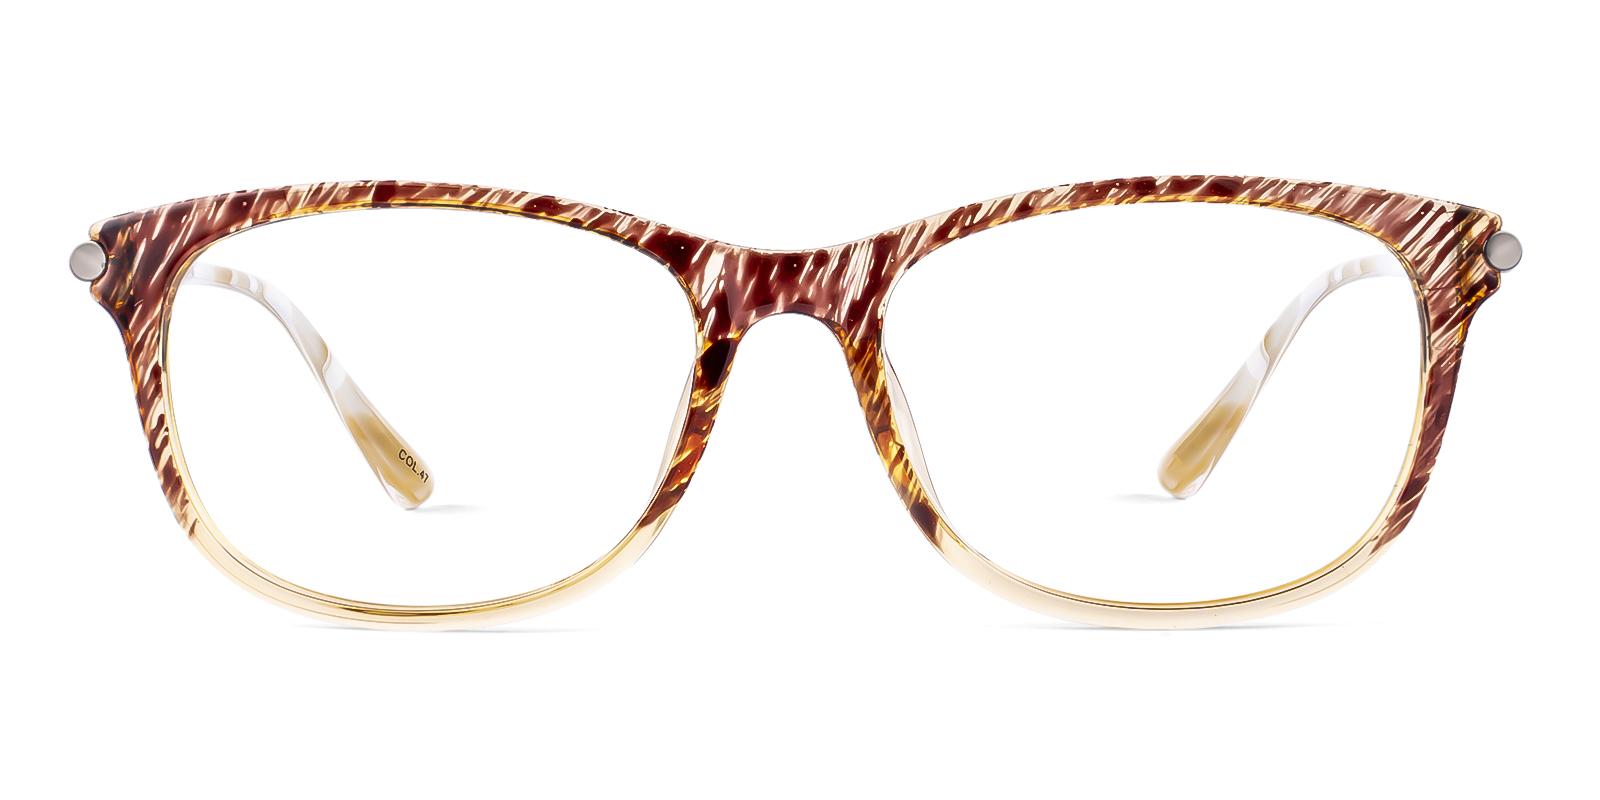 Amphible Striped Acetate Eyeglasses , SpringHinges , UniversalBridgeFit Frames from ABBE Glasses